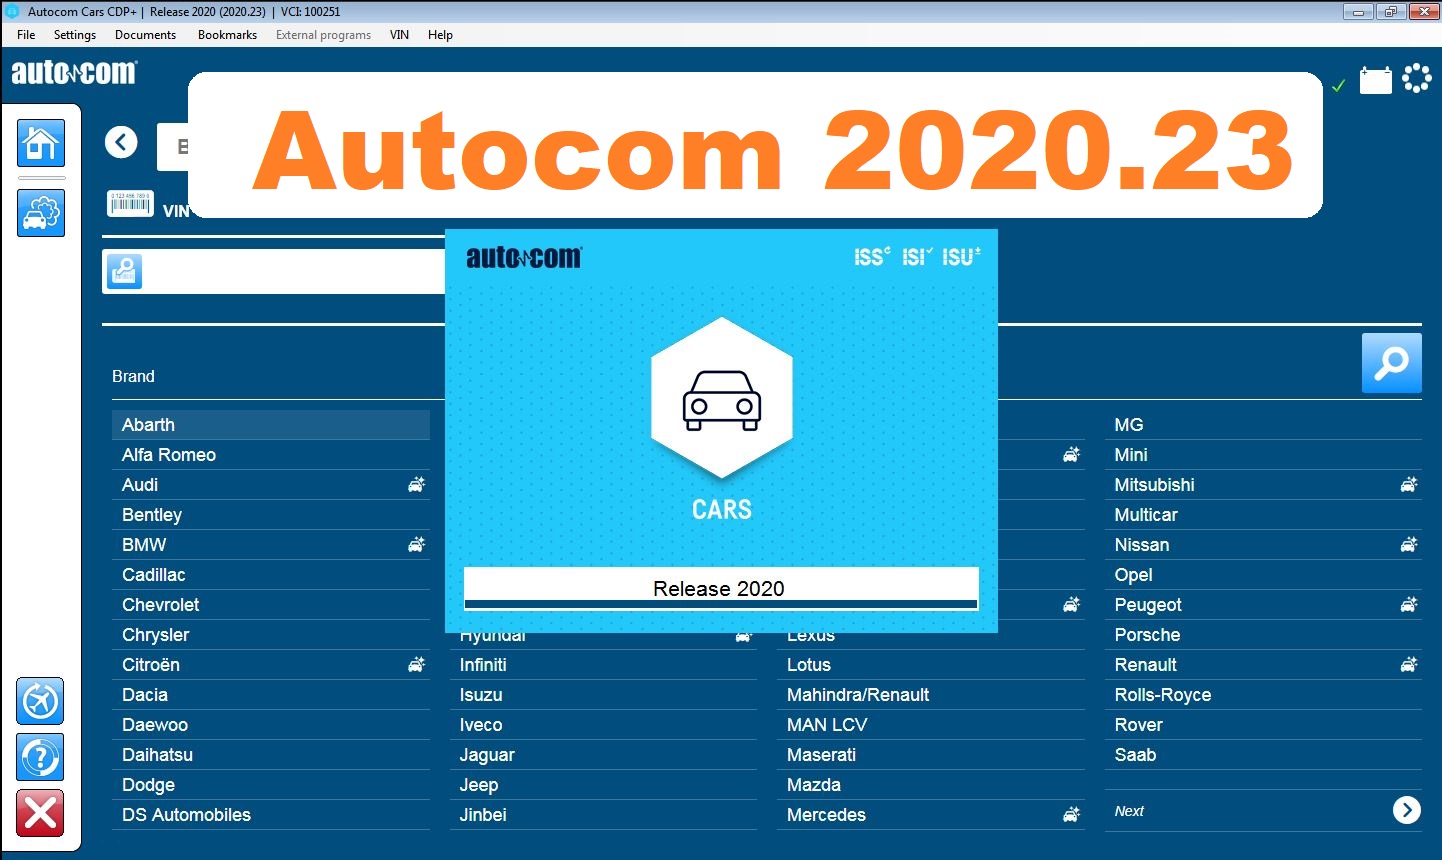 Autocom 2020.23 (Cars + Trucks) Software - native installation